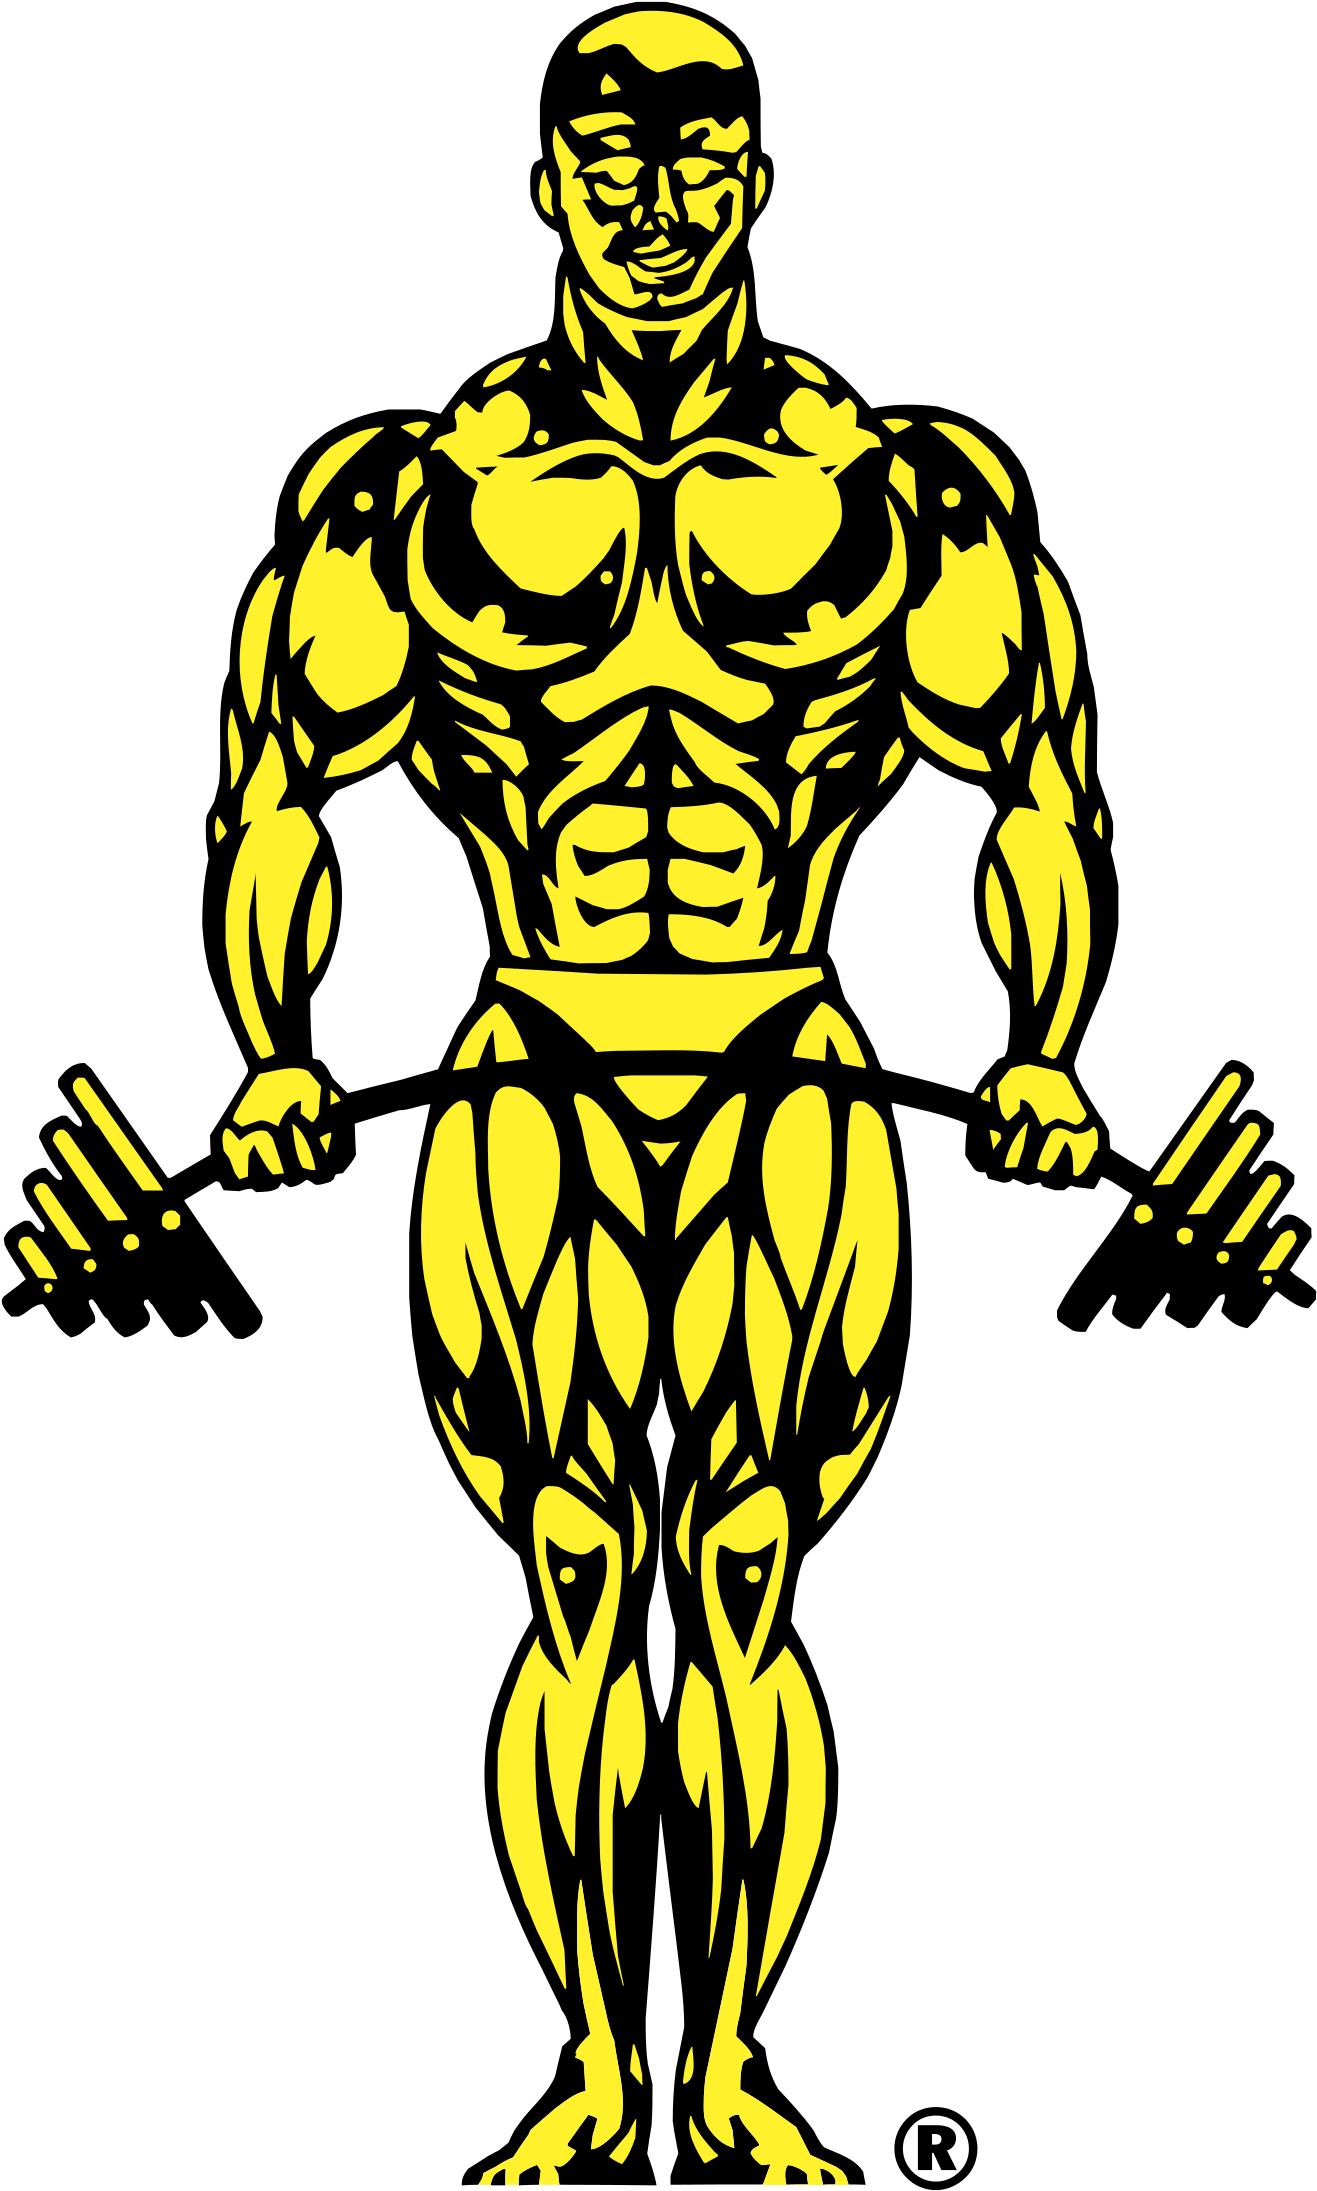 Download Gold S Gym Logo Png Transparent Golds Gym Logo Png Image With No Background Pngkey Com